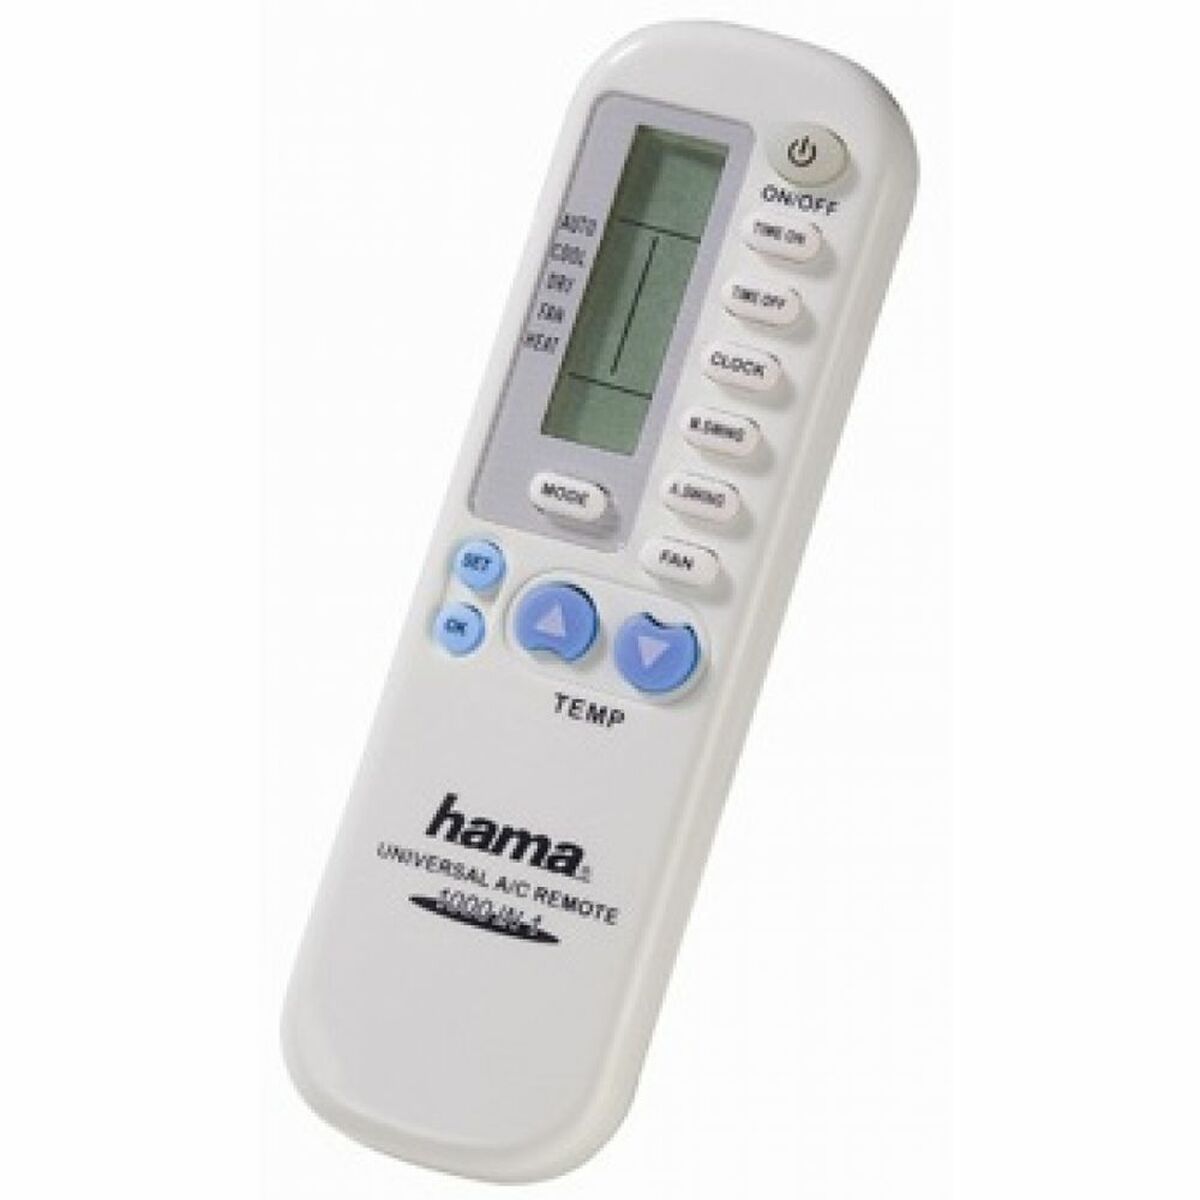 Télécommande Universelle Hama Technics 69040080